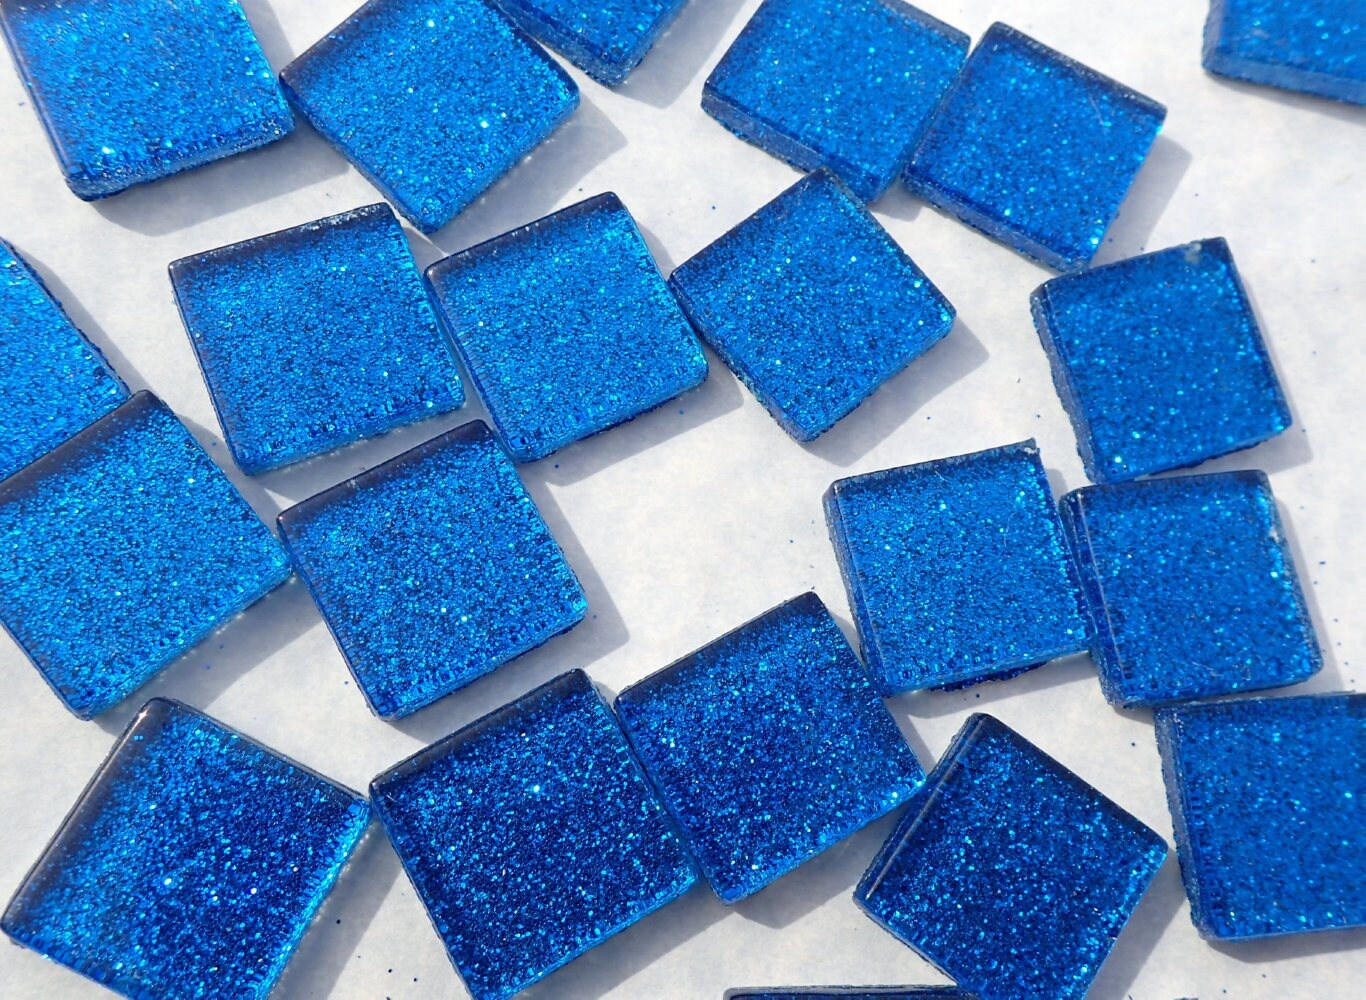 Blue Glitter Tiles - 20mm Mosaic Tiles - 25 Metallic Glass Tiles in Medium Blue